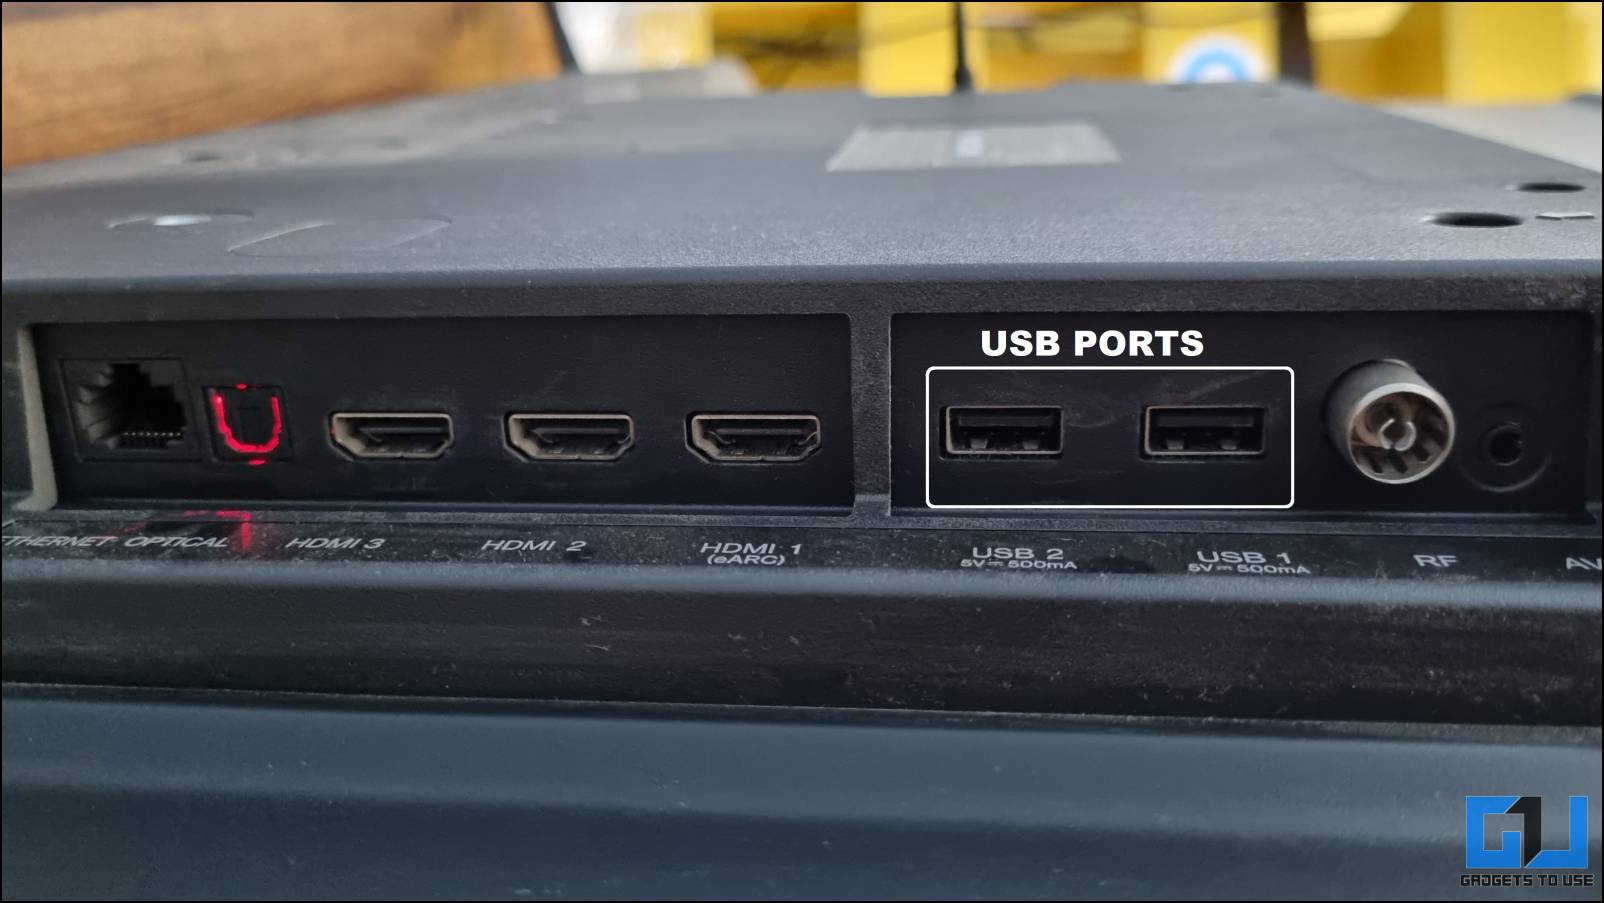 USB Port on a TV